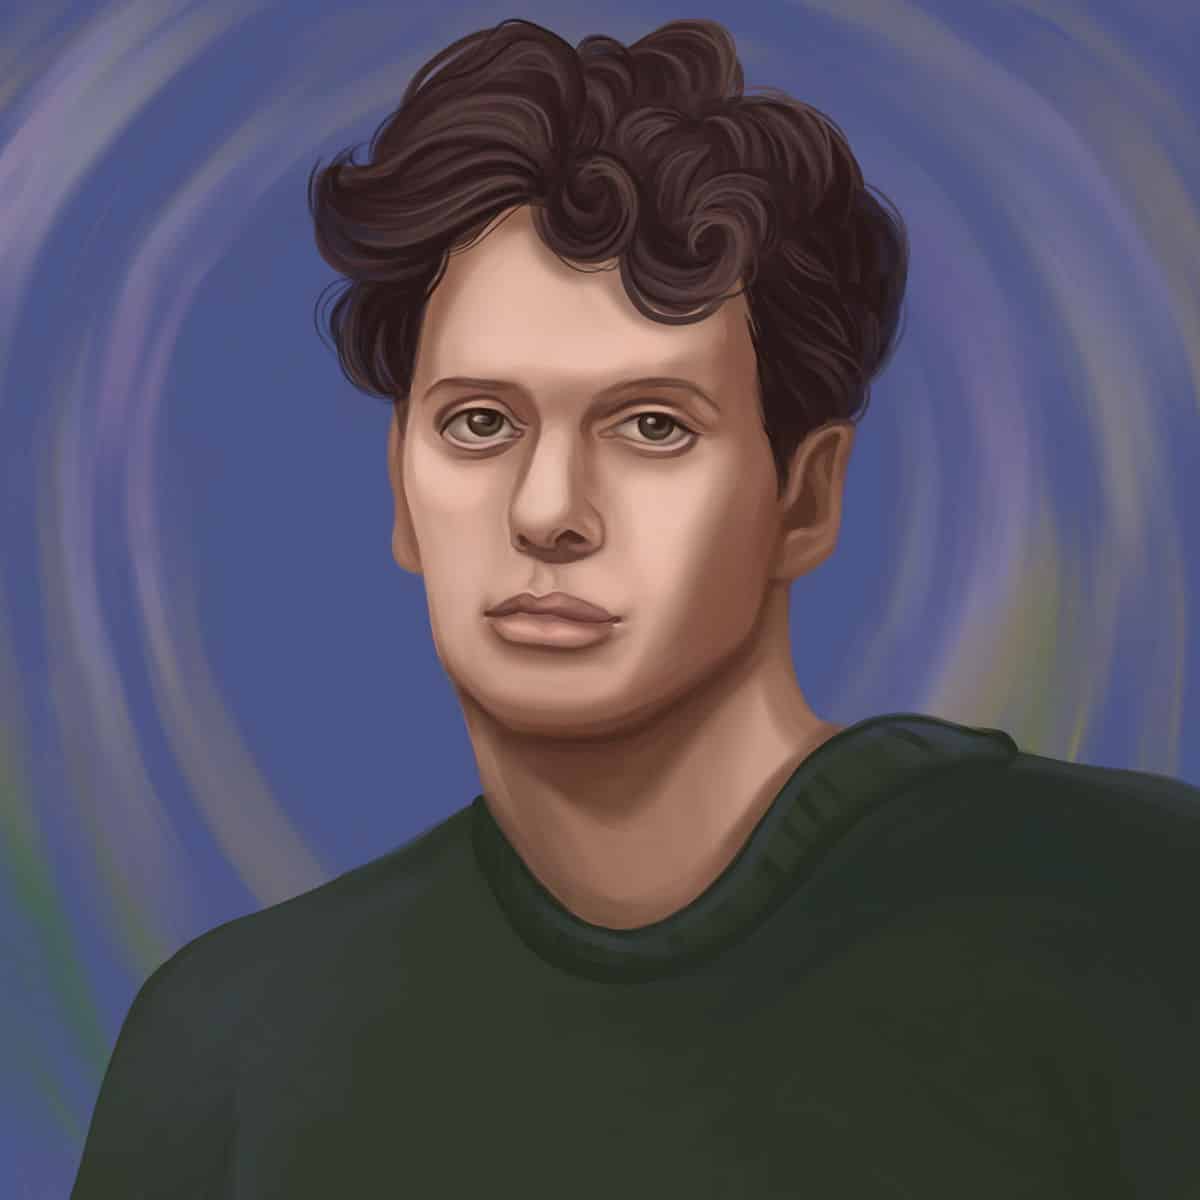 Dylan Thomas Portrait